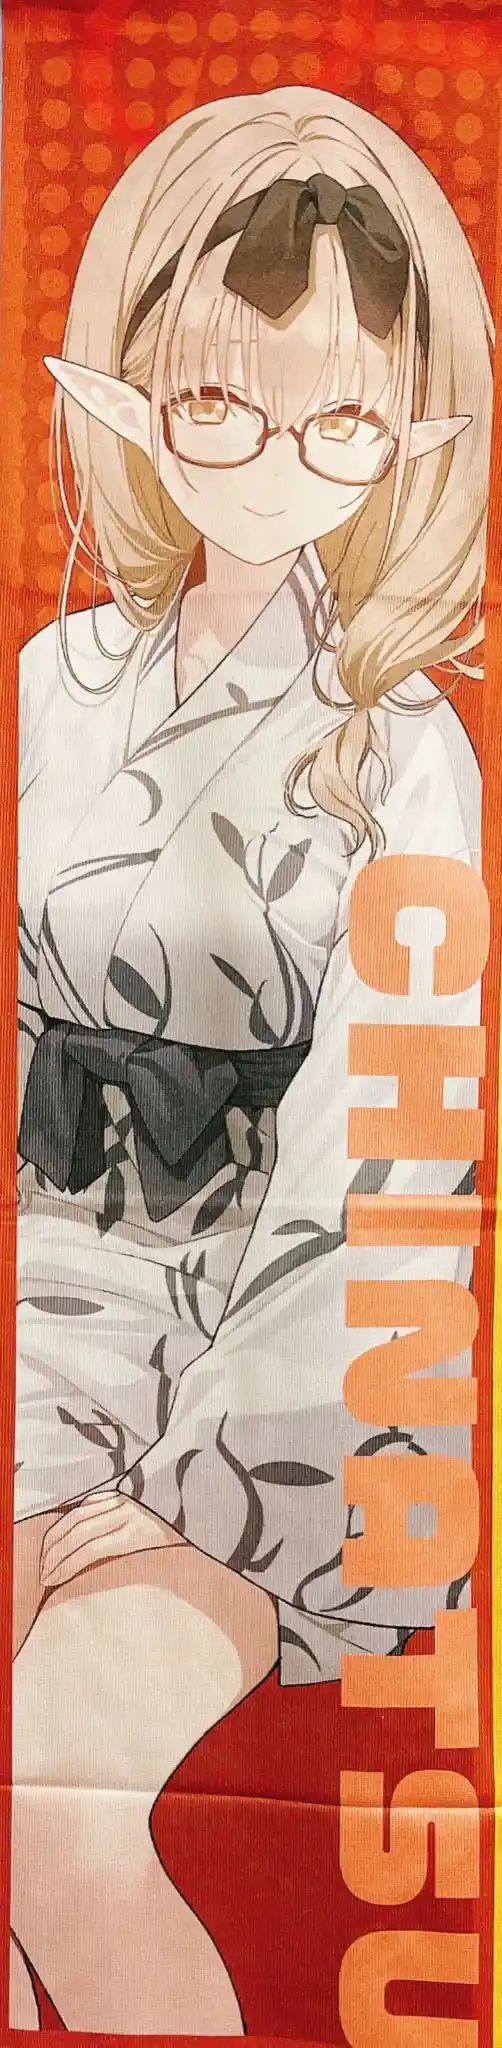 onchitsu towel.jpg